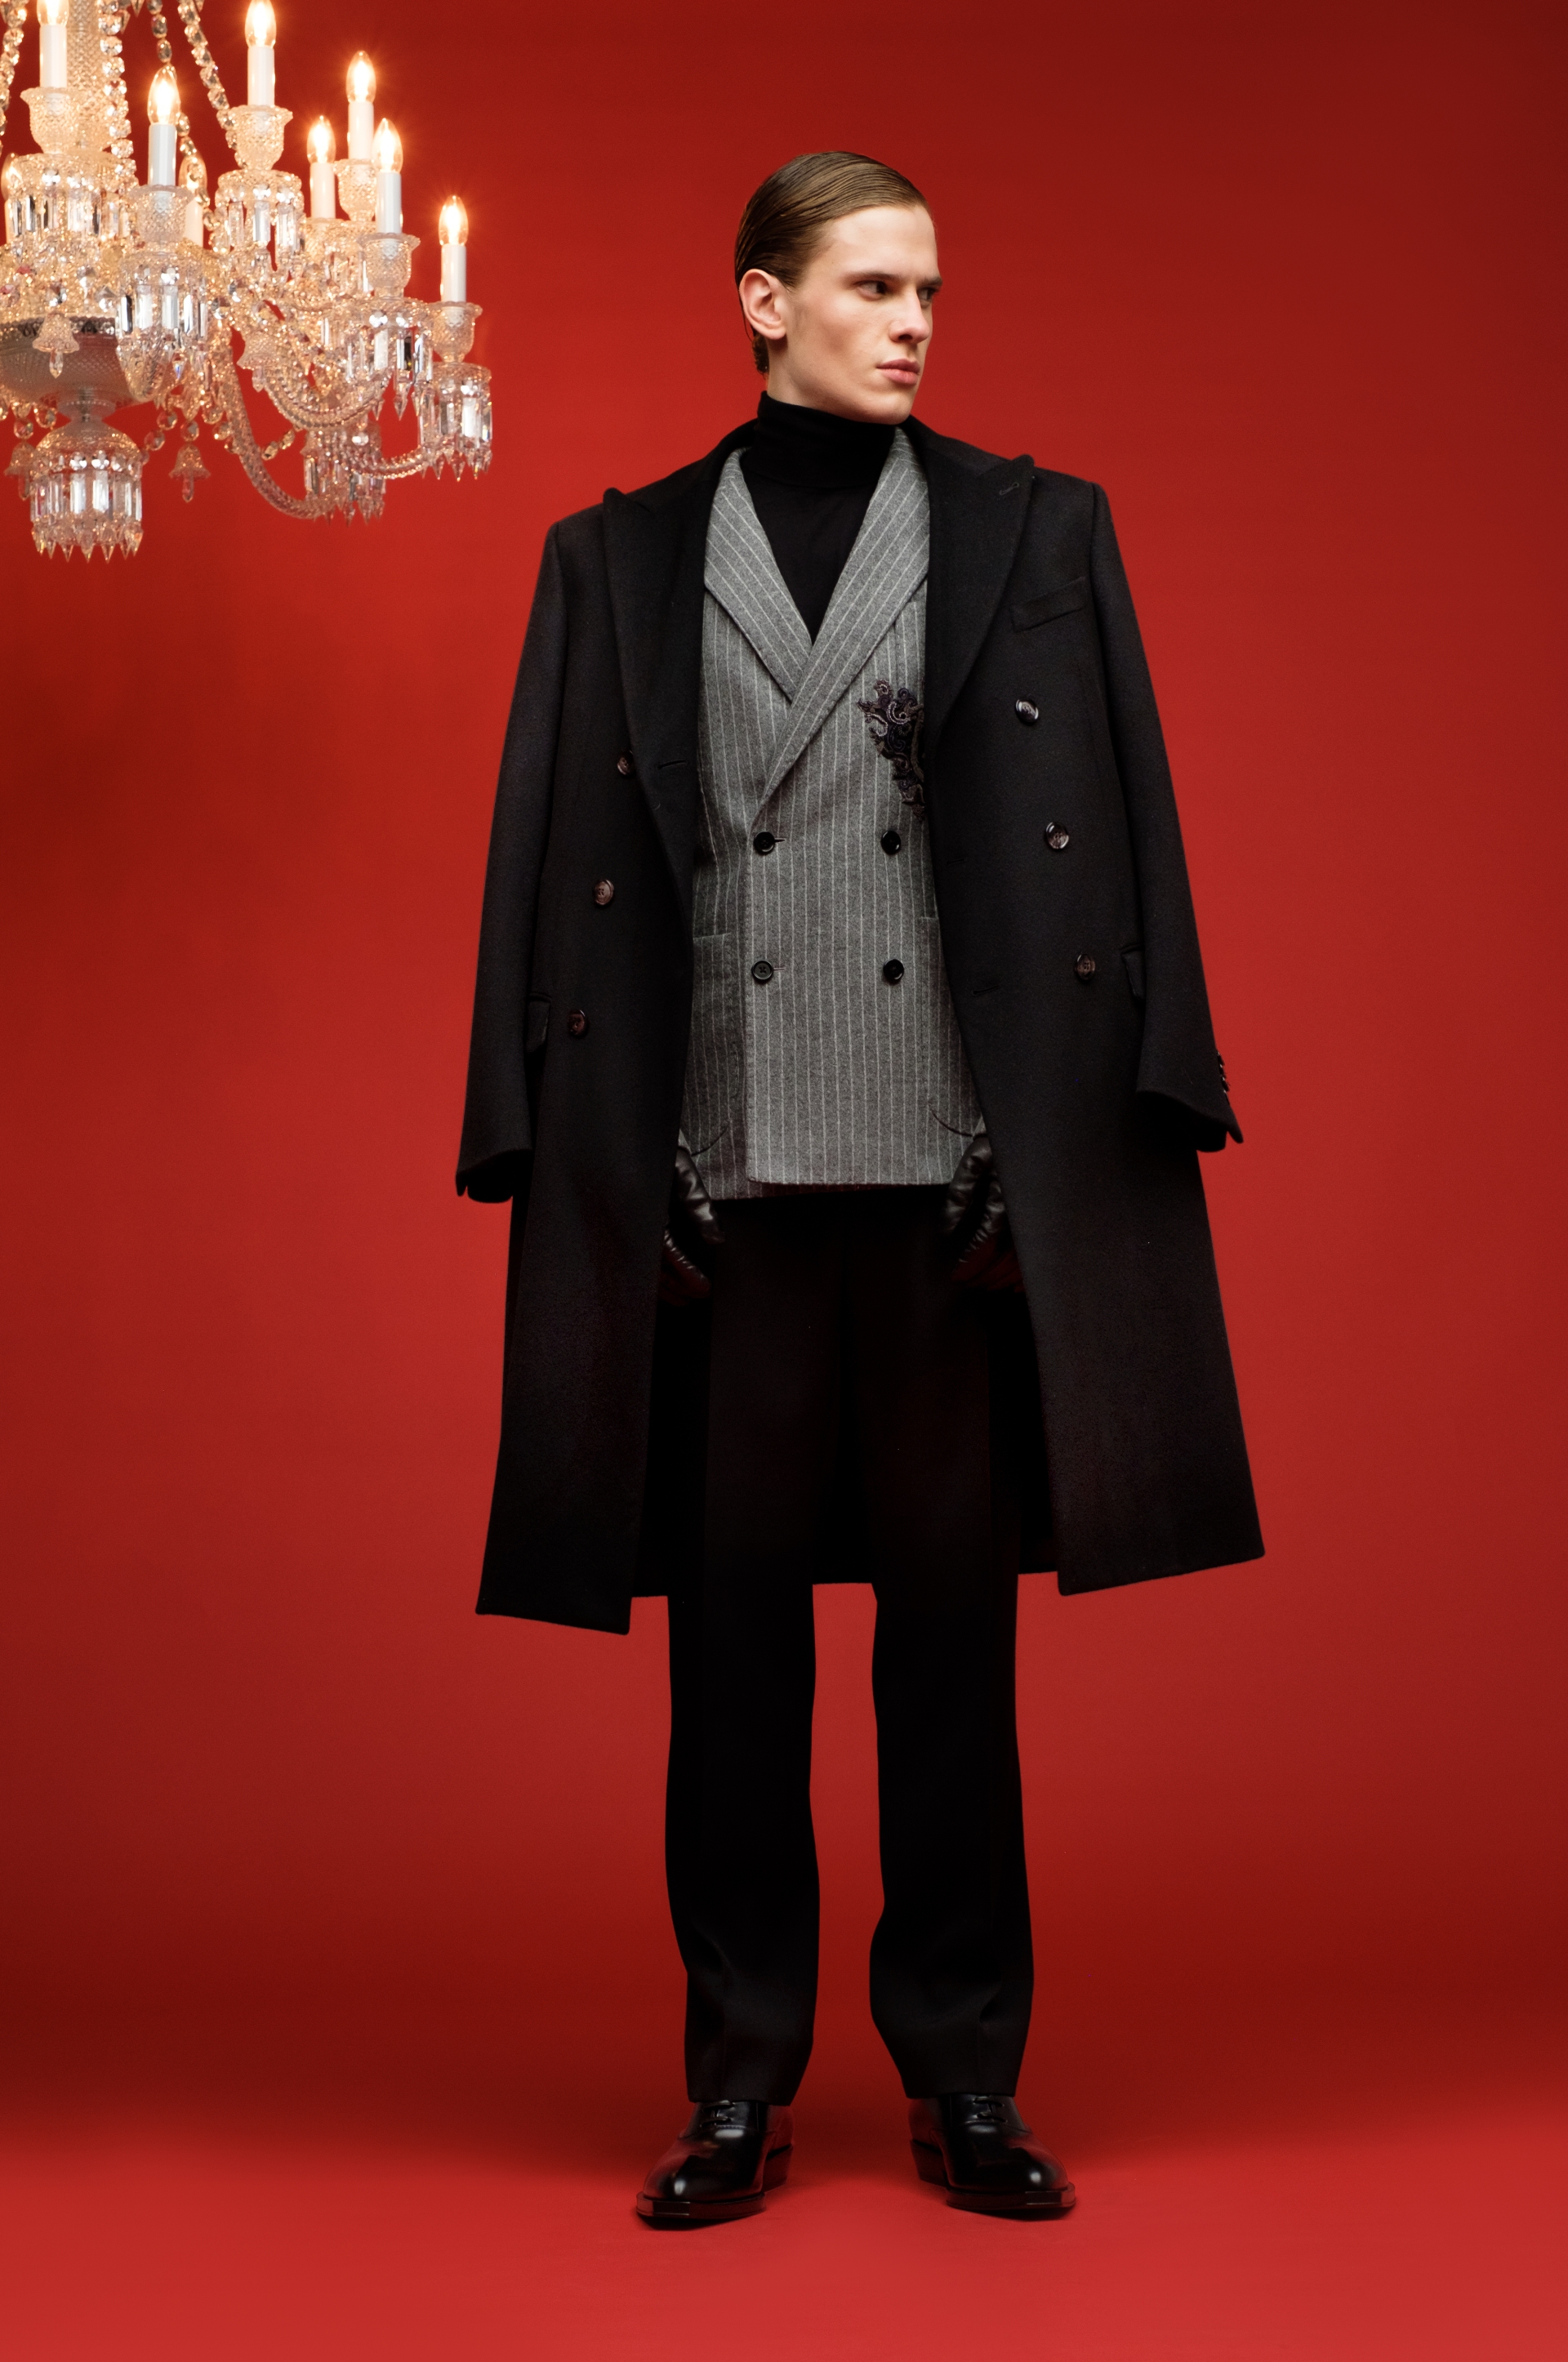 Пальто Giorgio Armani, 241&nbsp;000 руб., пиджак Dolce &amp; Gabbana, 215&nbsp;000 руб., водолазка Tom Ford, 59&nbsp;950 руб., брюки (75 950 руб.) и оксфорды (68 200 руб.)&nbsp;&mdash; все Bottega Veneta